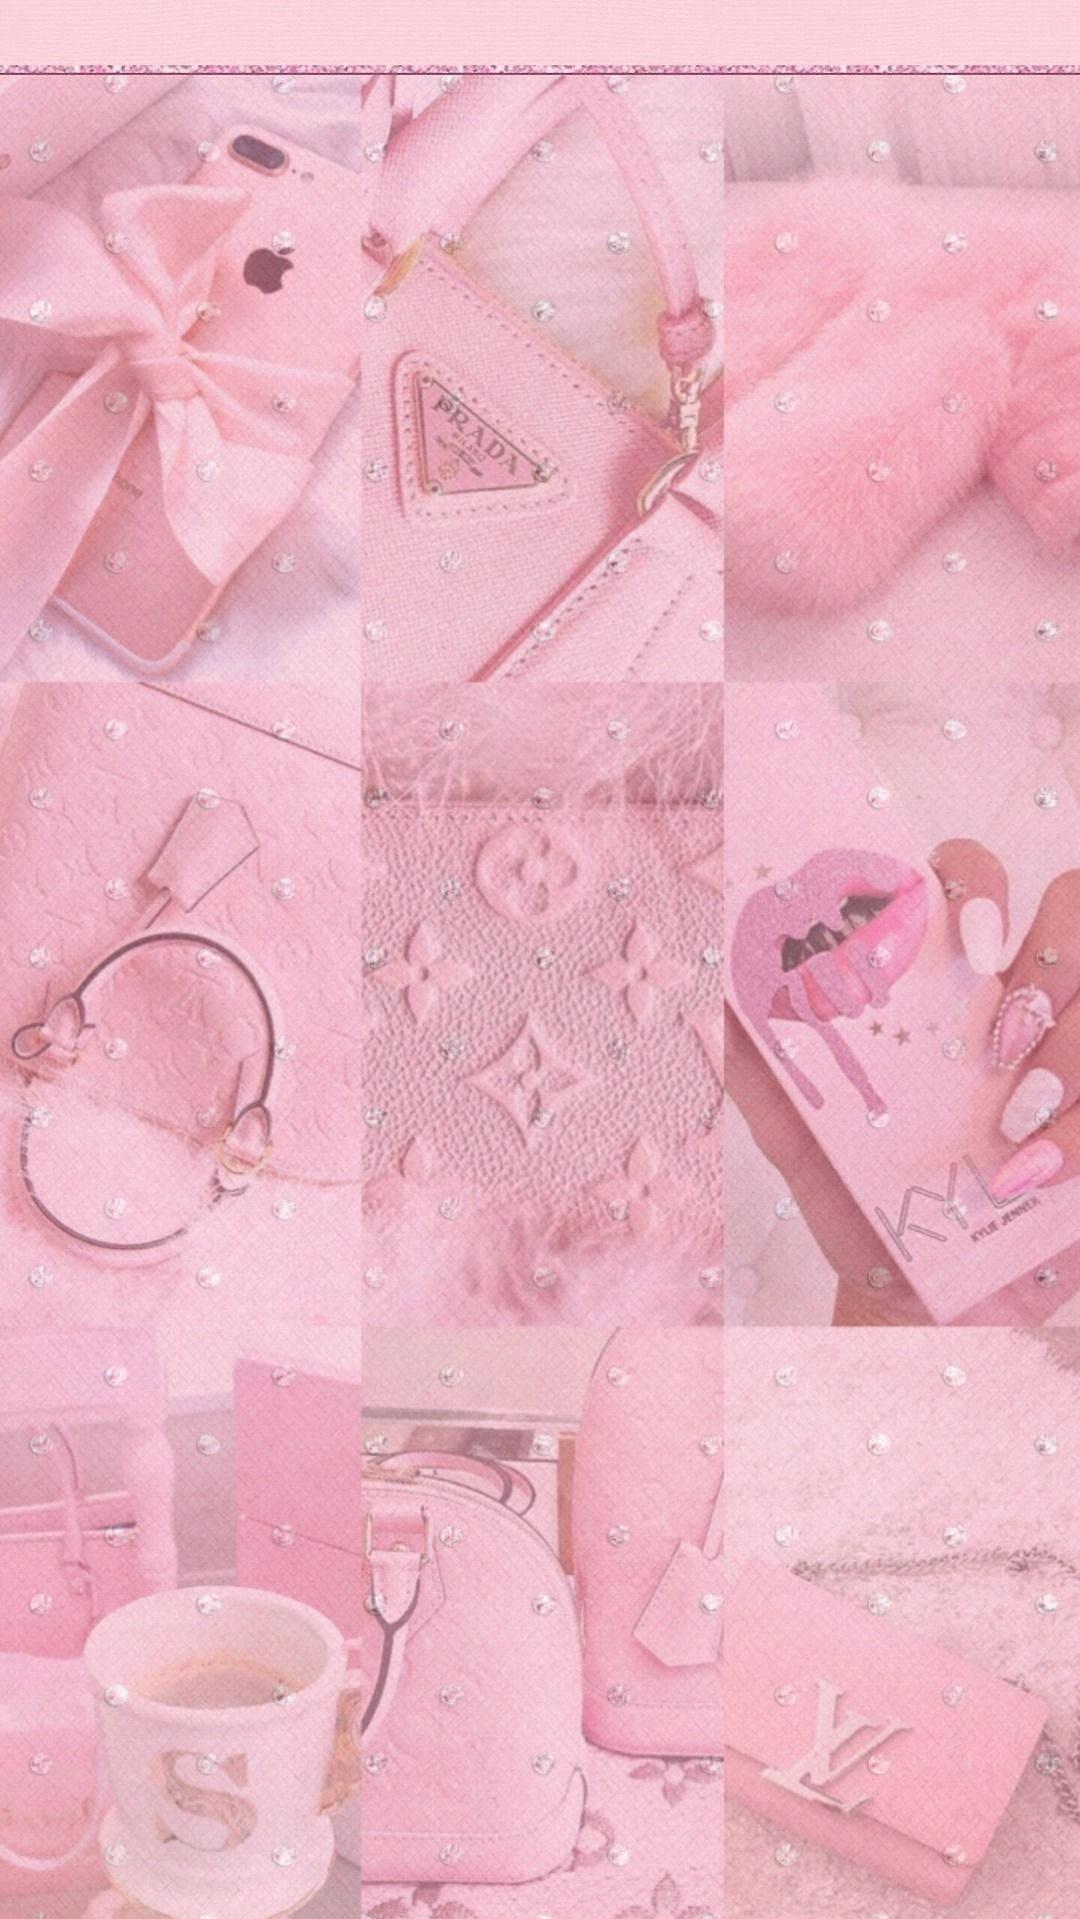 Pretty Pink Aesthetic Lock Screen Wallpaper